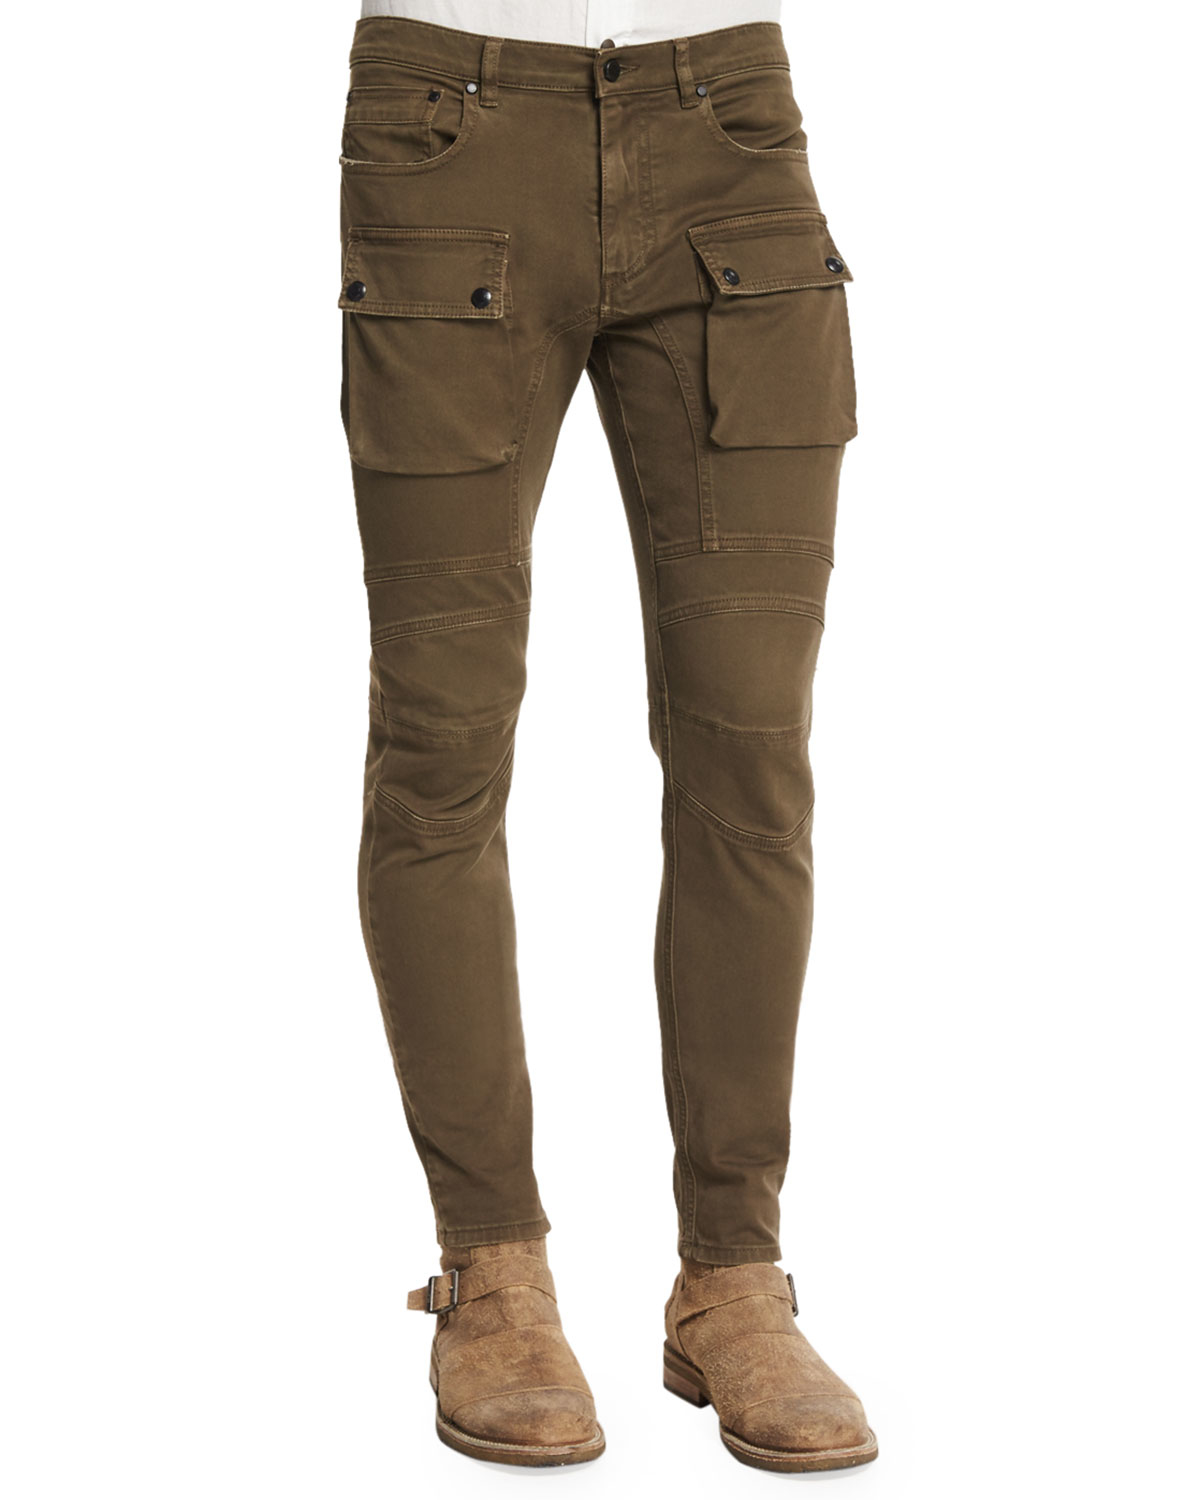 Lyst - Belstaff Felmore Slim-fit Cargo Pants in Natural for Men